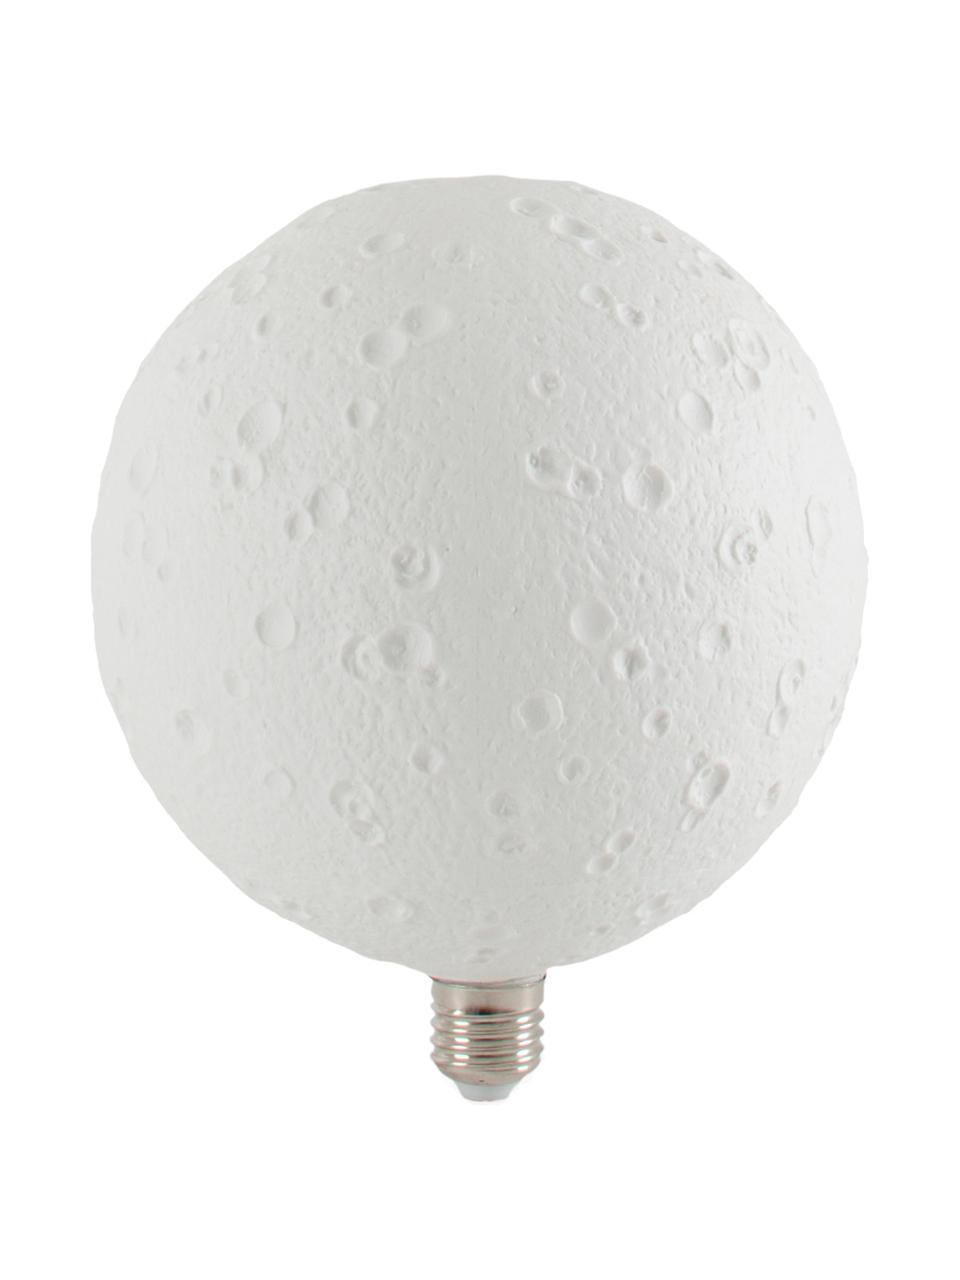 E27 Leuchtmittel, 220lm, neutrales Weiß, 1 Stück, Leuchtmittelschirm: Porzellan, Leuchtmittelfassung: Aluminium, Weiß, Ø 18 x H 20 cm